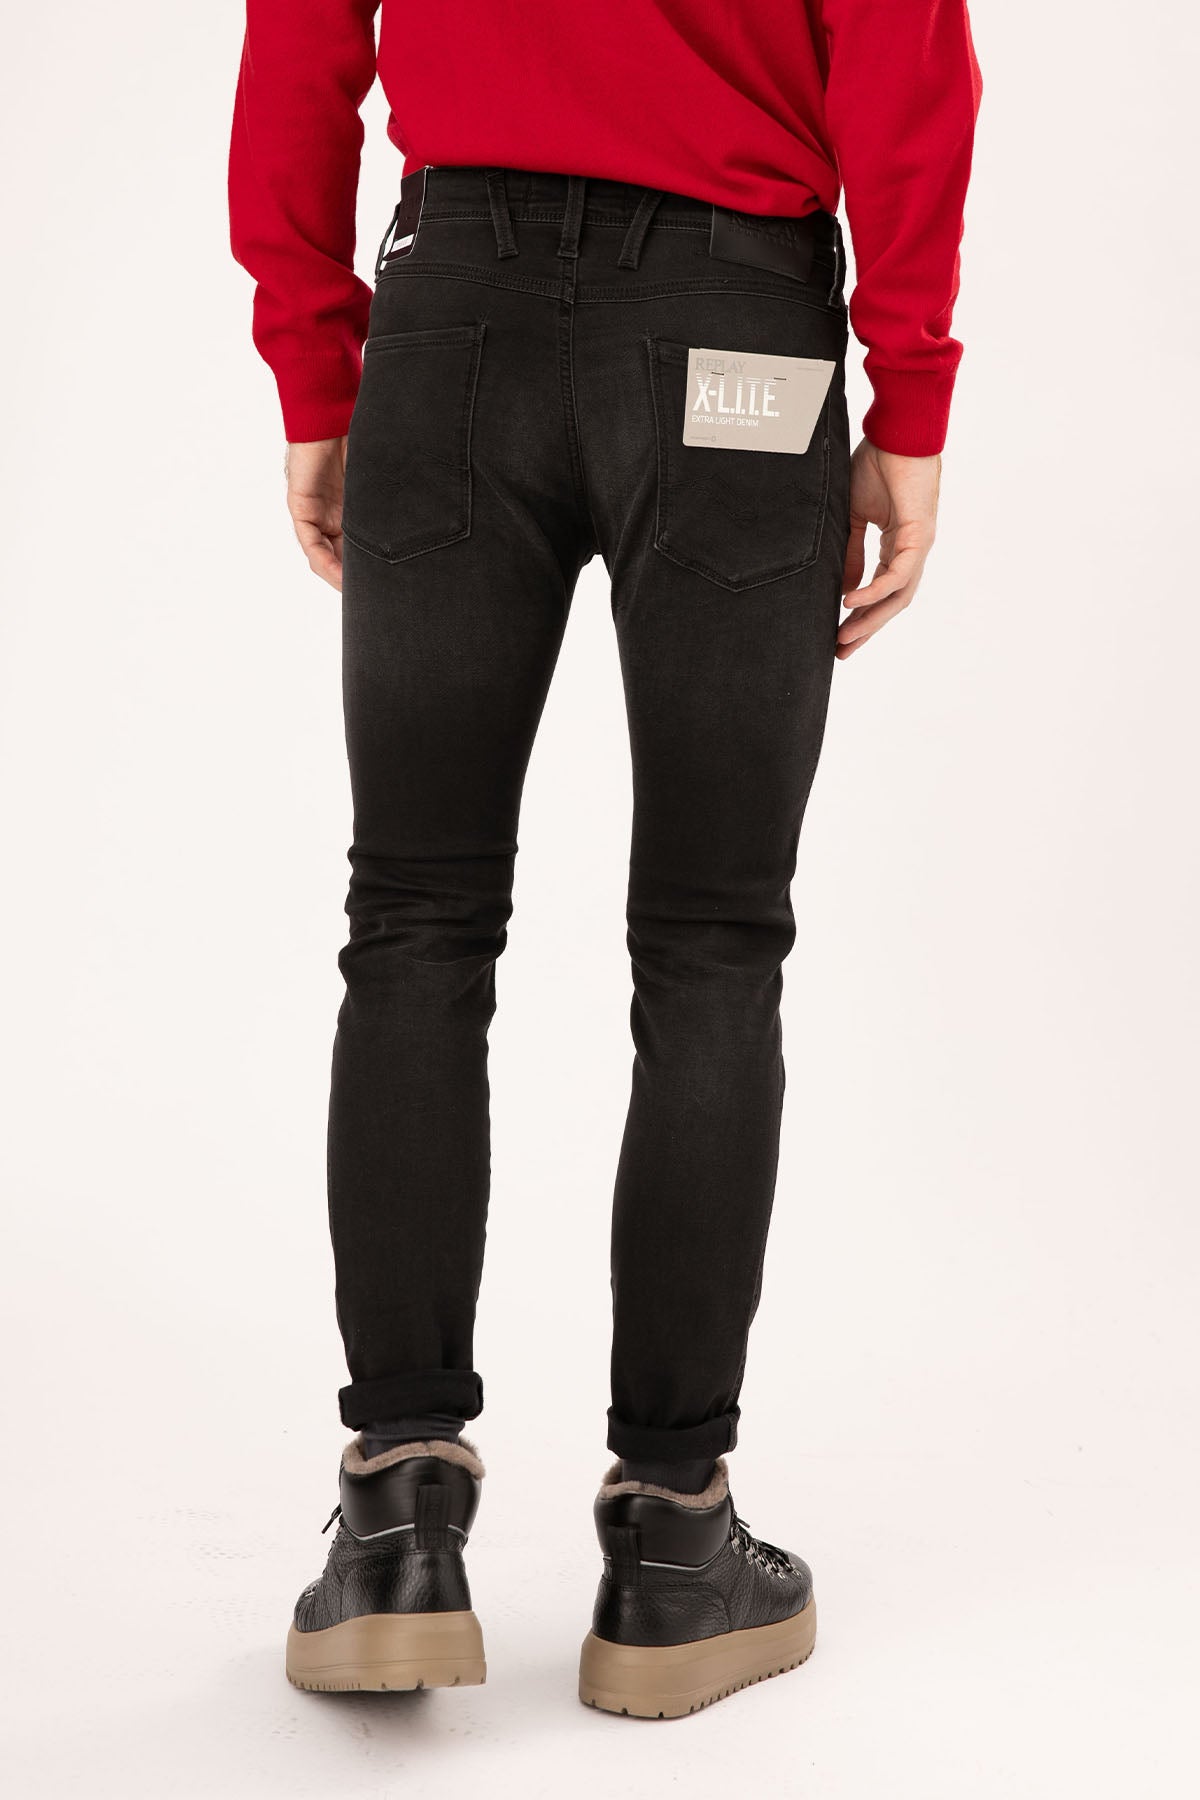 Replay X-Lite Anbass Slim Fit Jeans-Libas Trendy Fashion Store